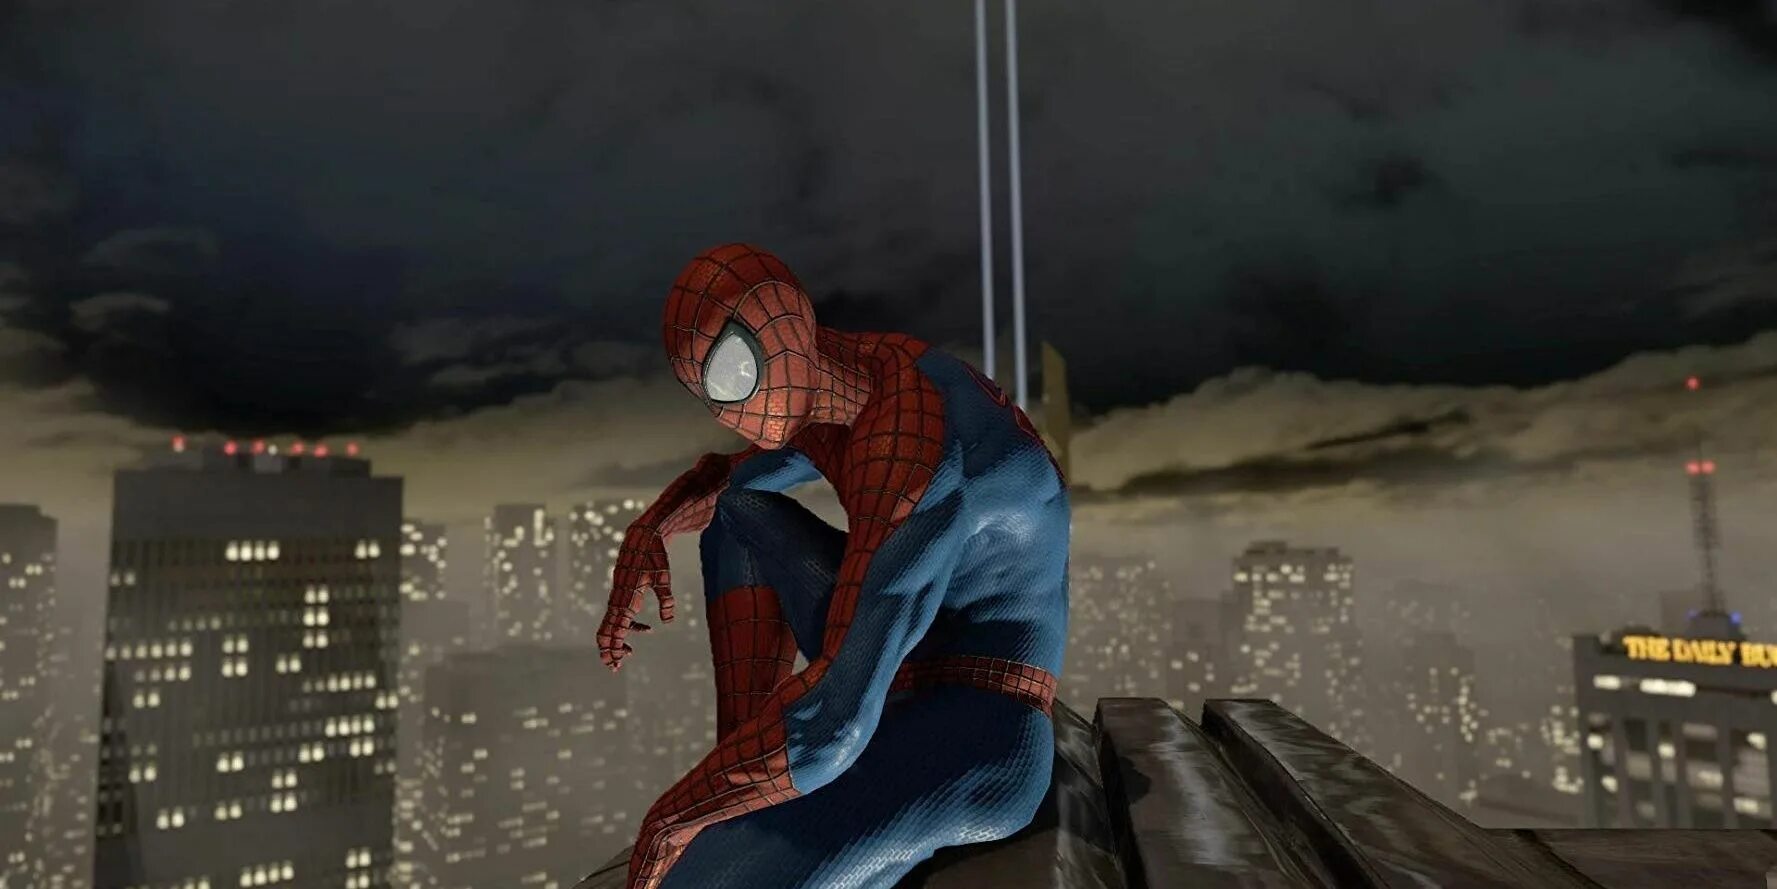 Spider man игра 2012. The amazing Spider-man 1 игра. Человек паук Амейзинг 2. Человек паук амазинг 2 игра. The amazing Spider man 2 2014 игра.